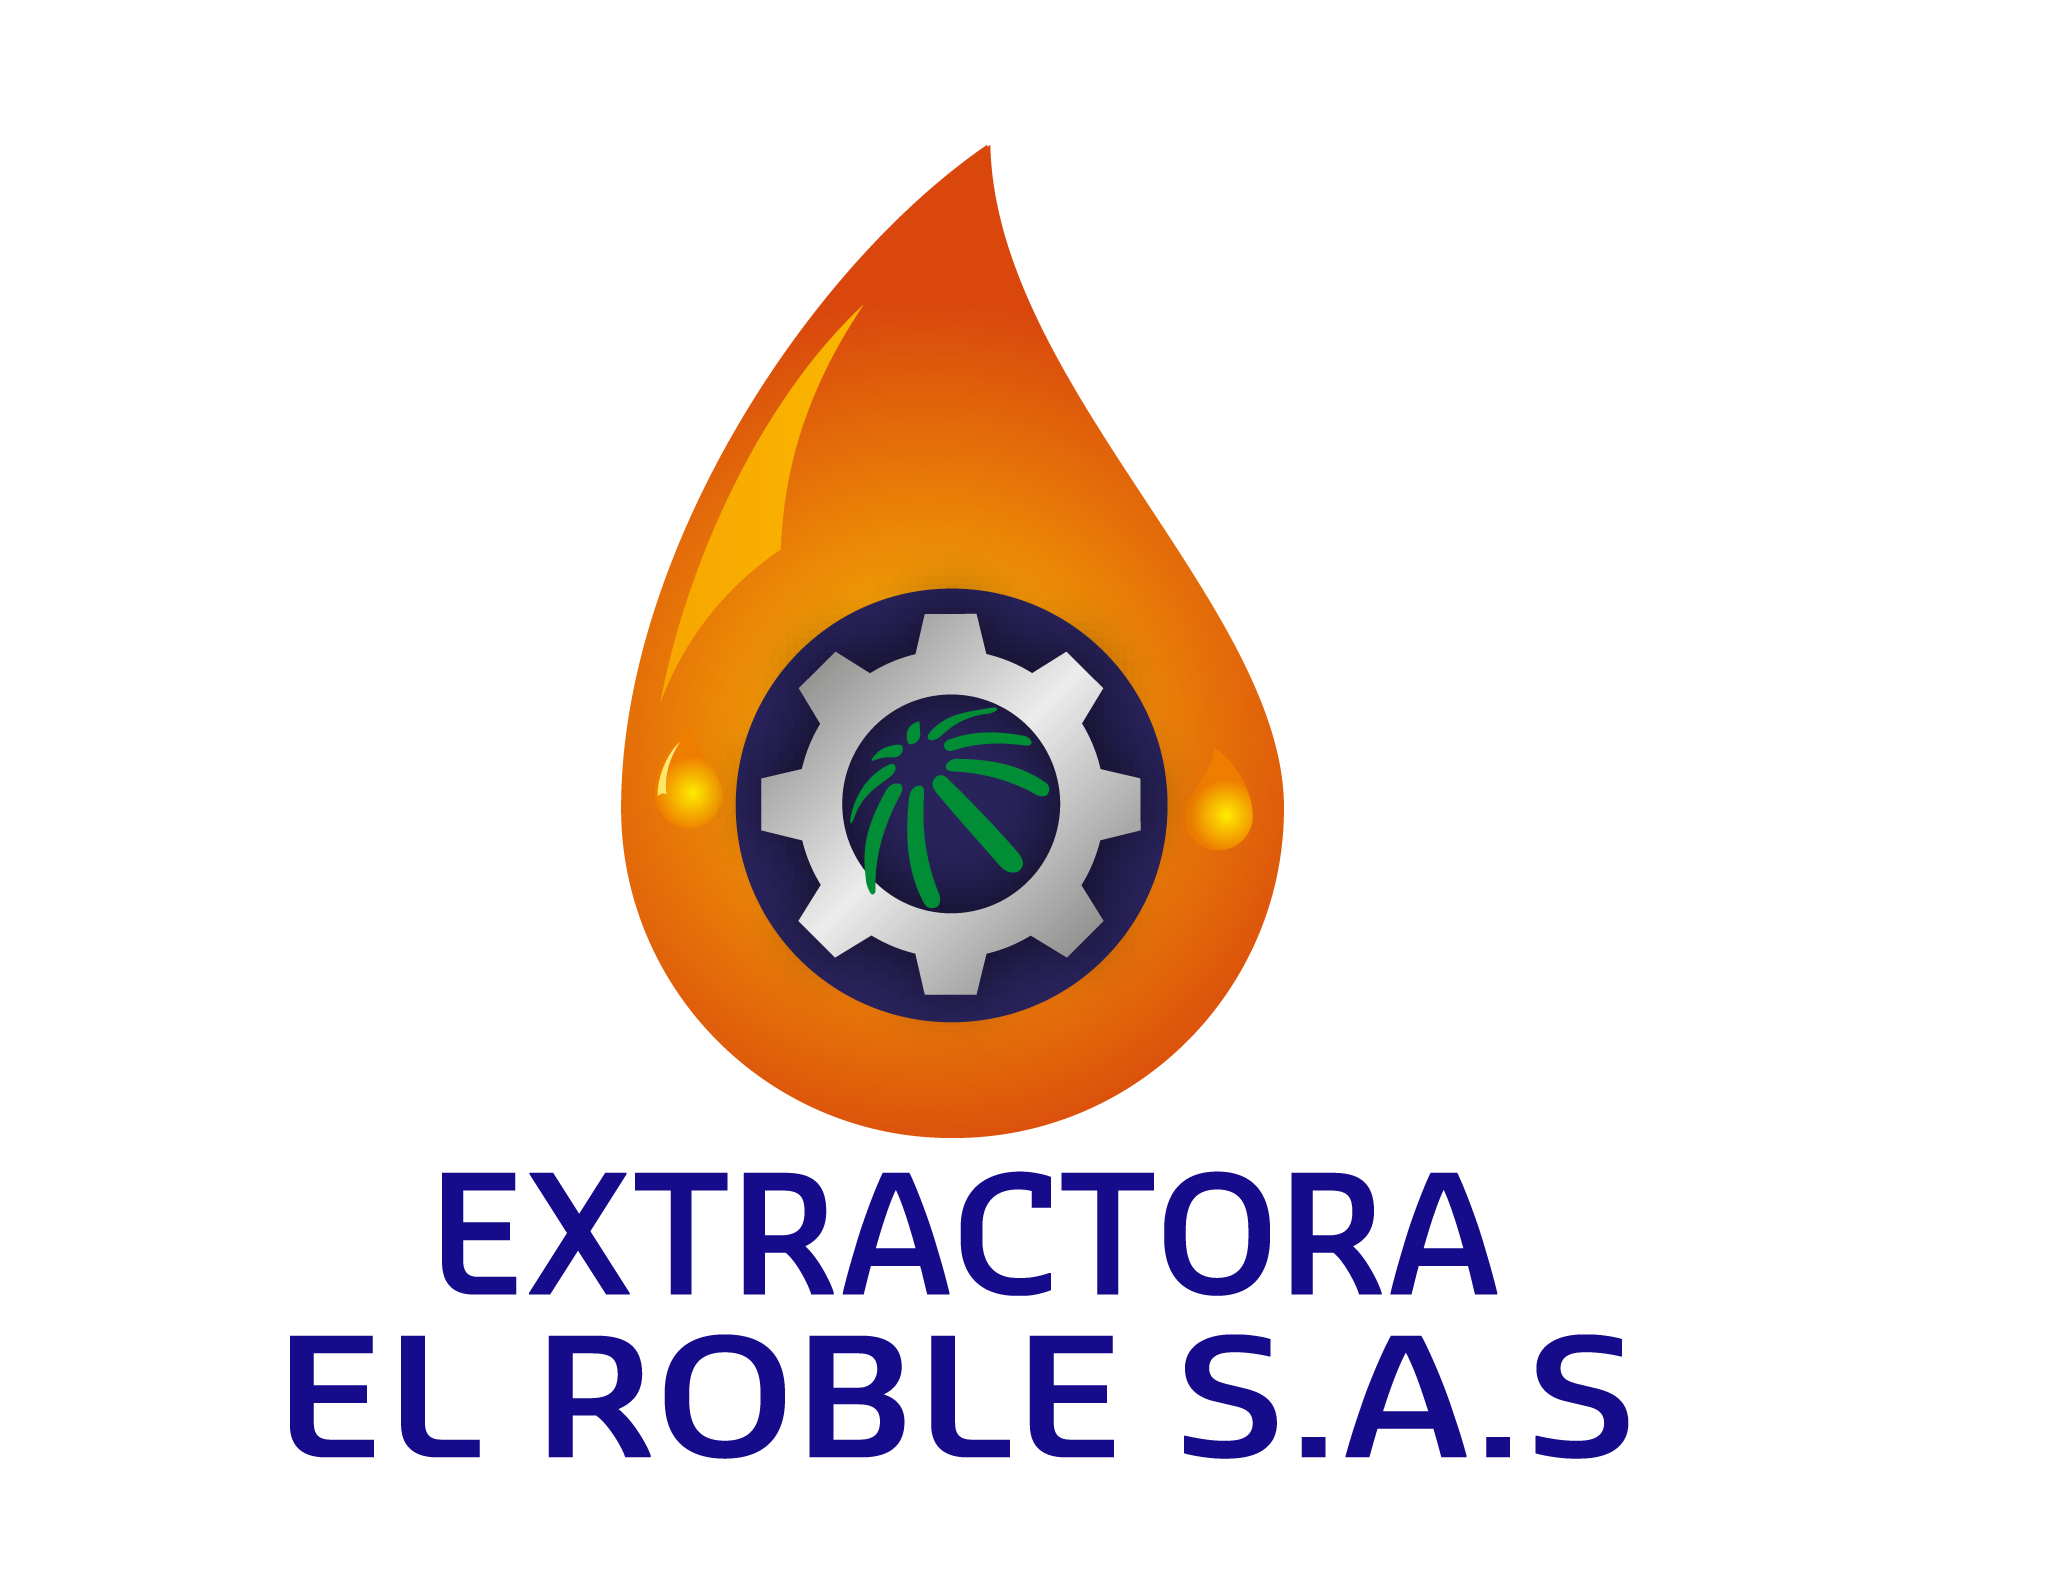 EXTRACTORA EL ROBLE S.A.S